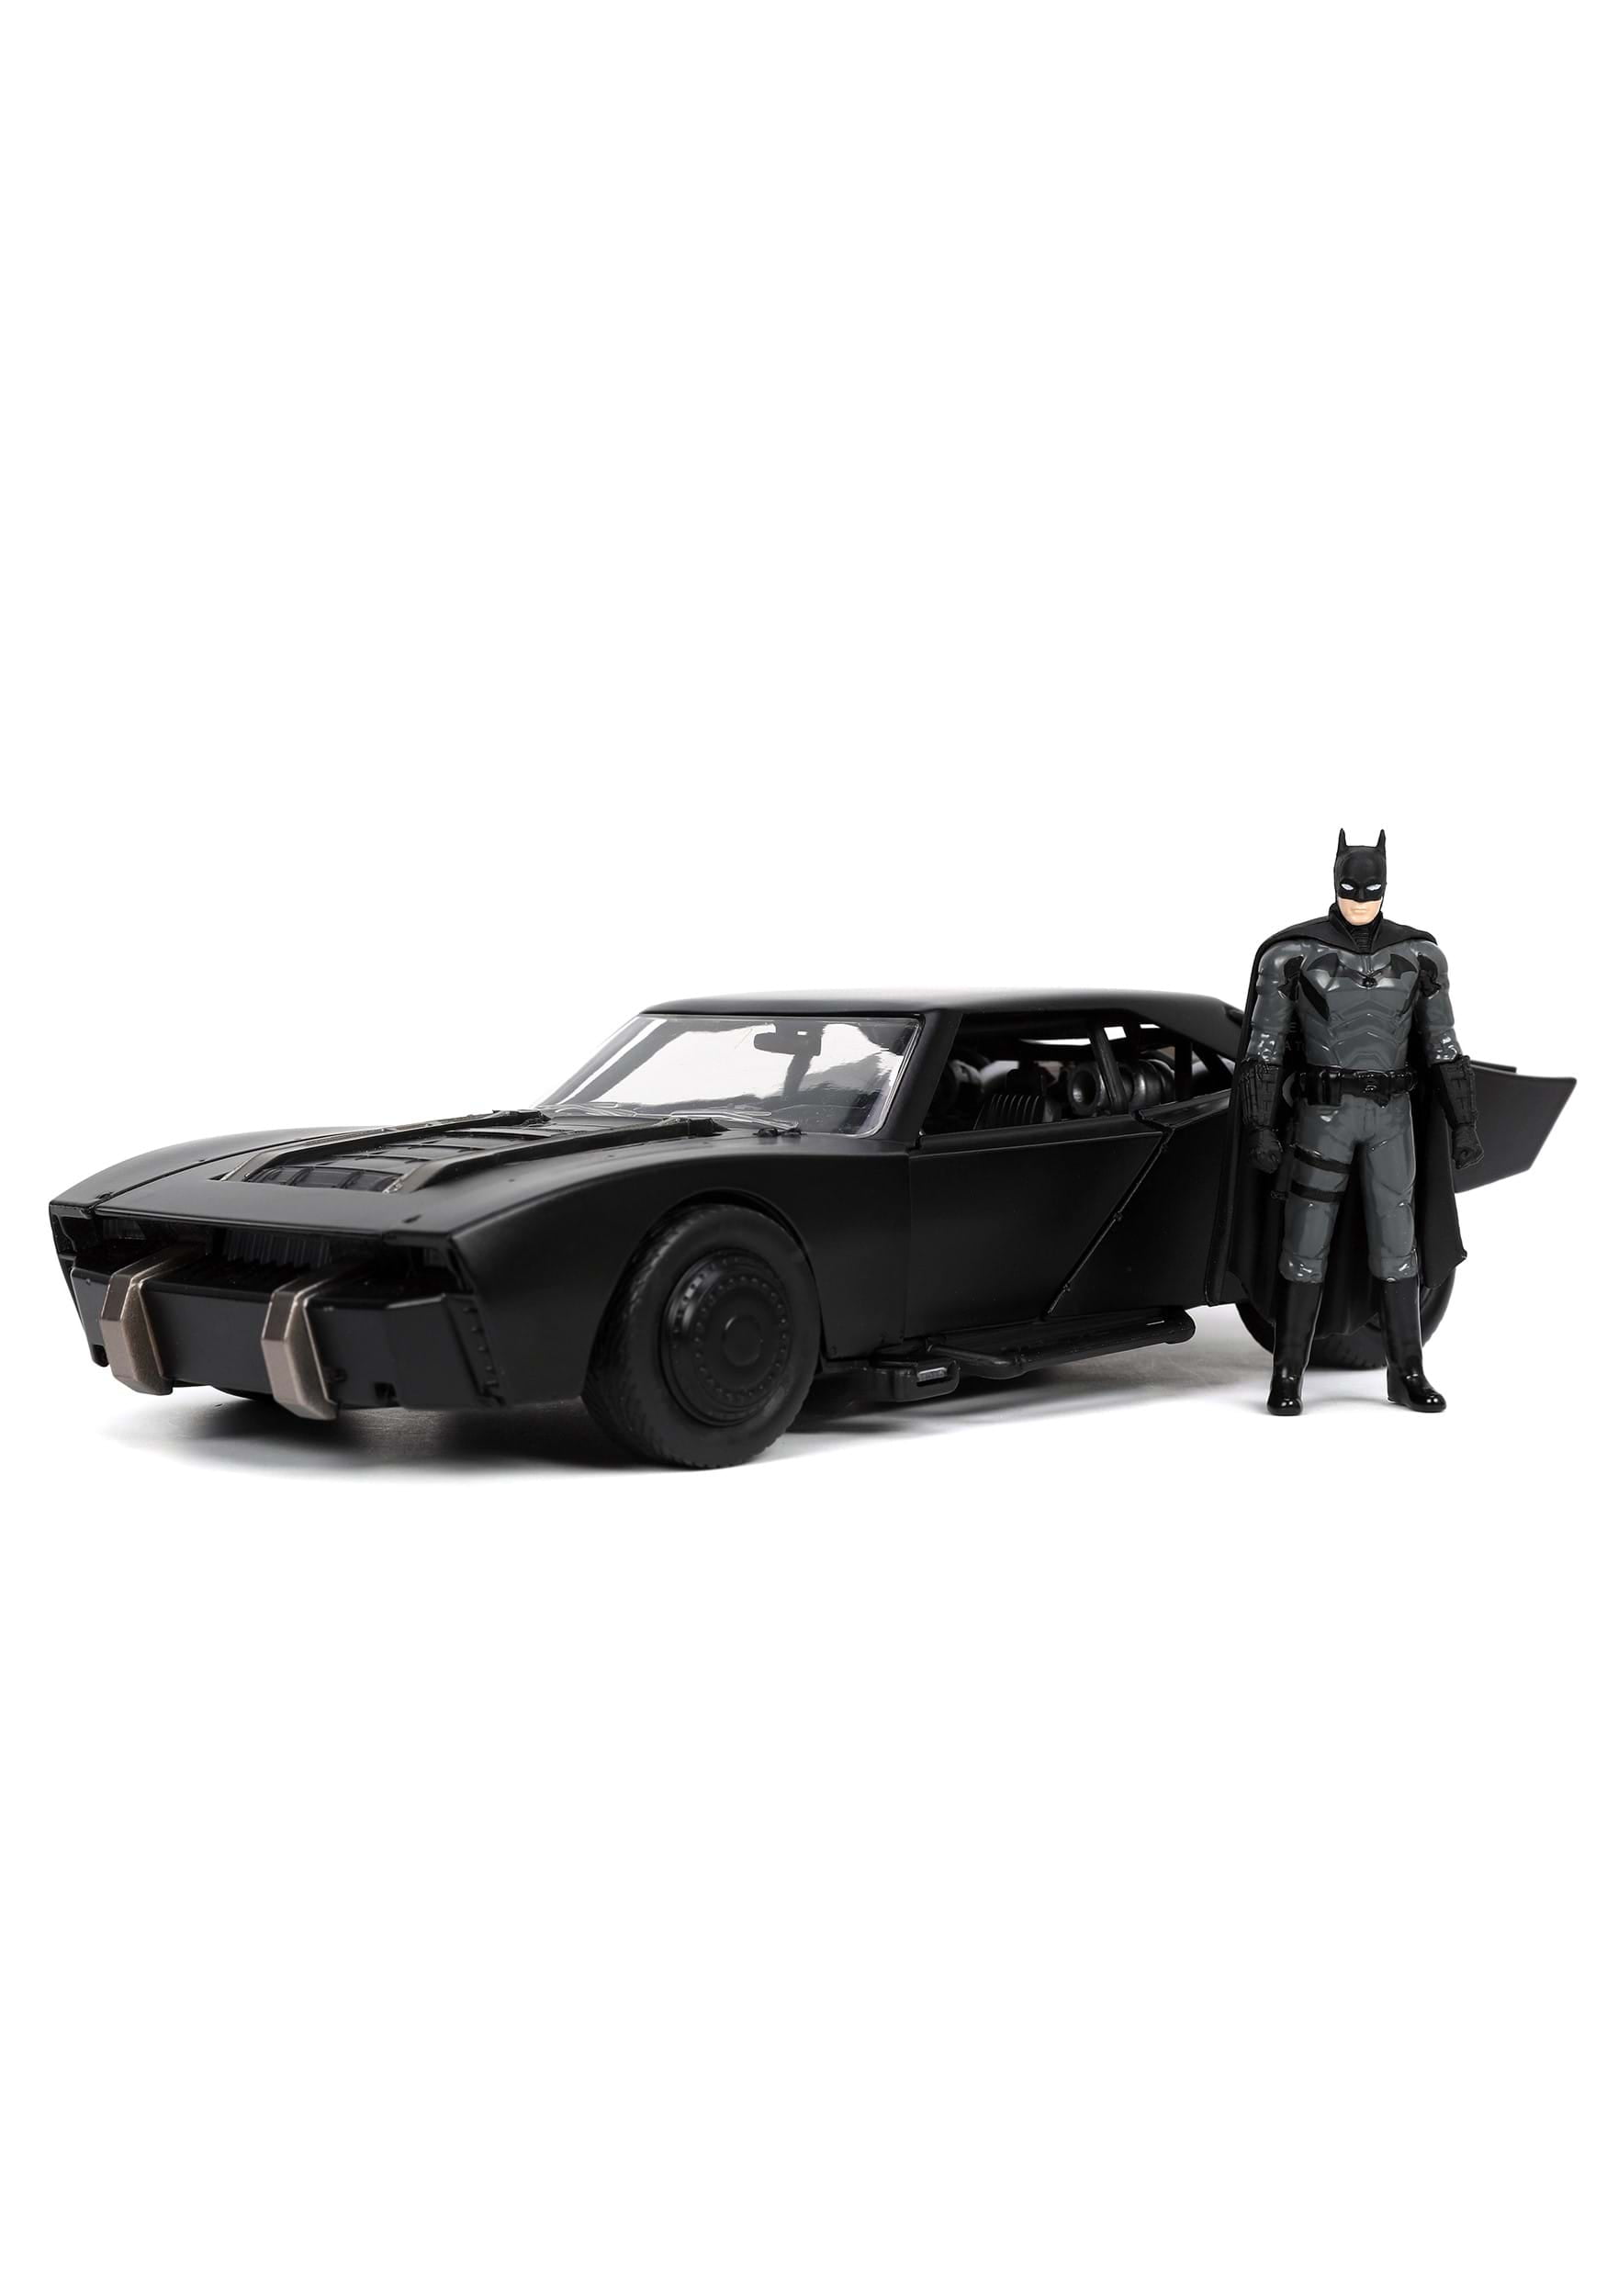 1/32 SLOT CAR DIECAST PLASTIC MODEL Batman Batmobile WHITE CUT & PEEL STICKERS 